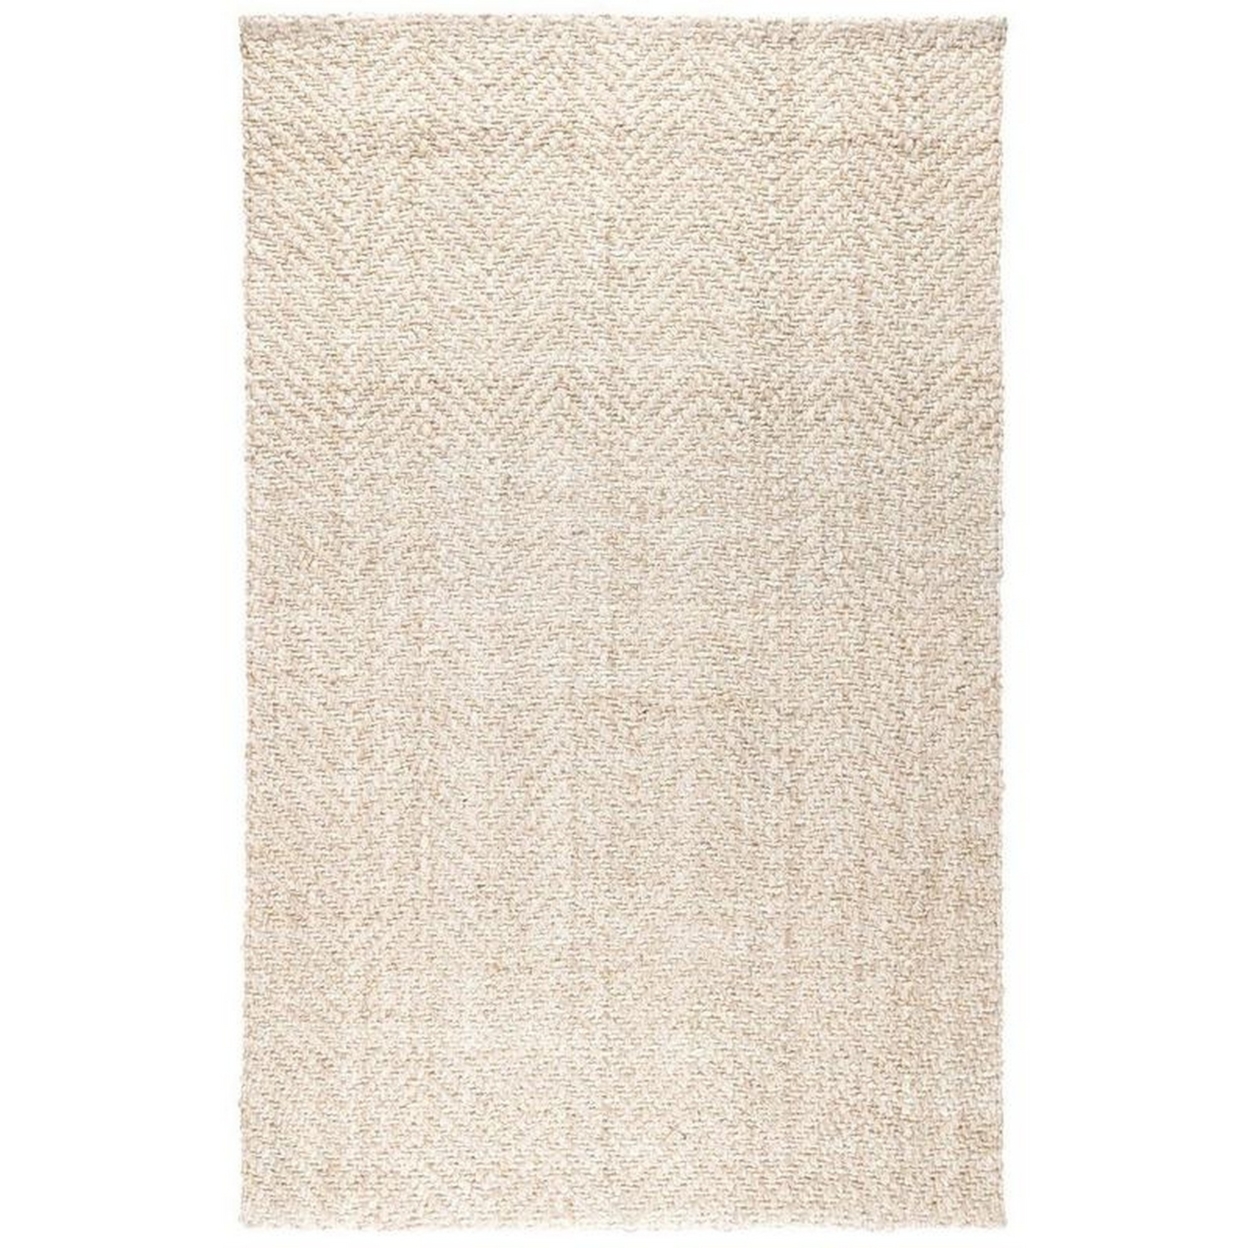 Milo 5 X 8 Area Rug, Handwoven Chevron Pattern, Ivory White Cotton Fabric- Saltoro Sherpi